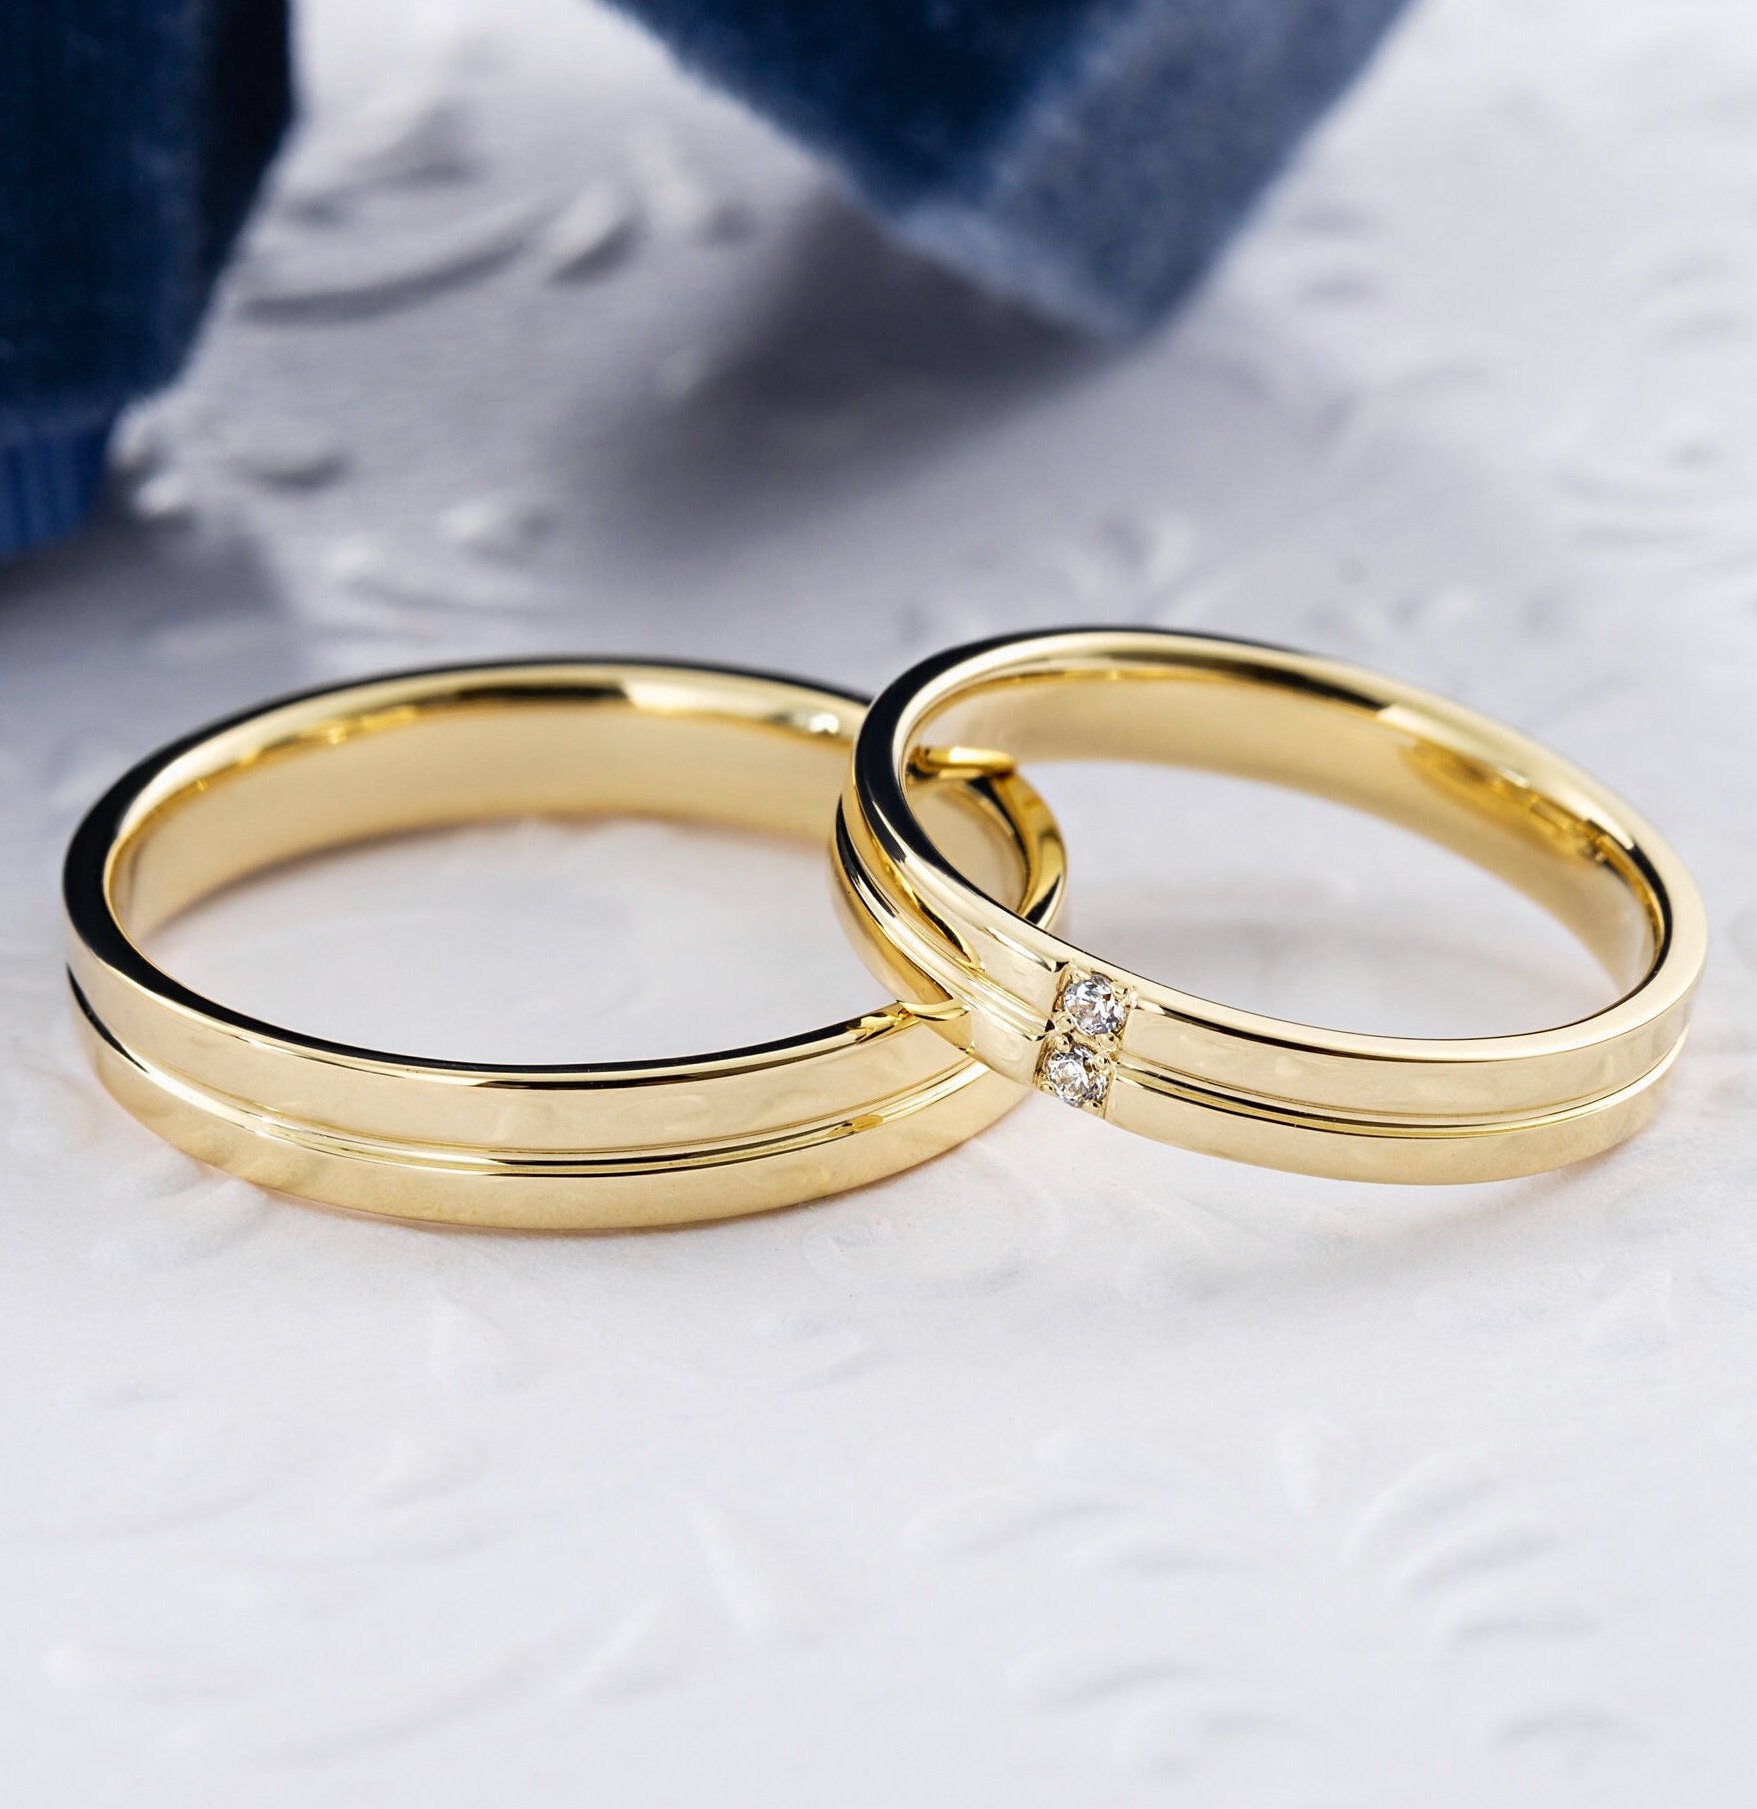 Bridal Nose Rings - Buy Bridal Nose Rings online at Best Prices in India |  Flipkart.com